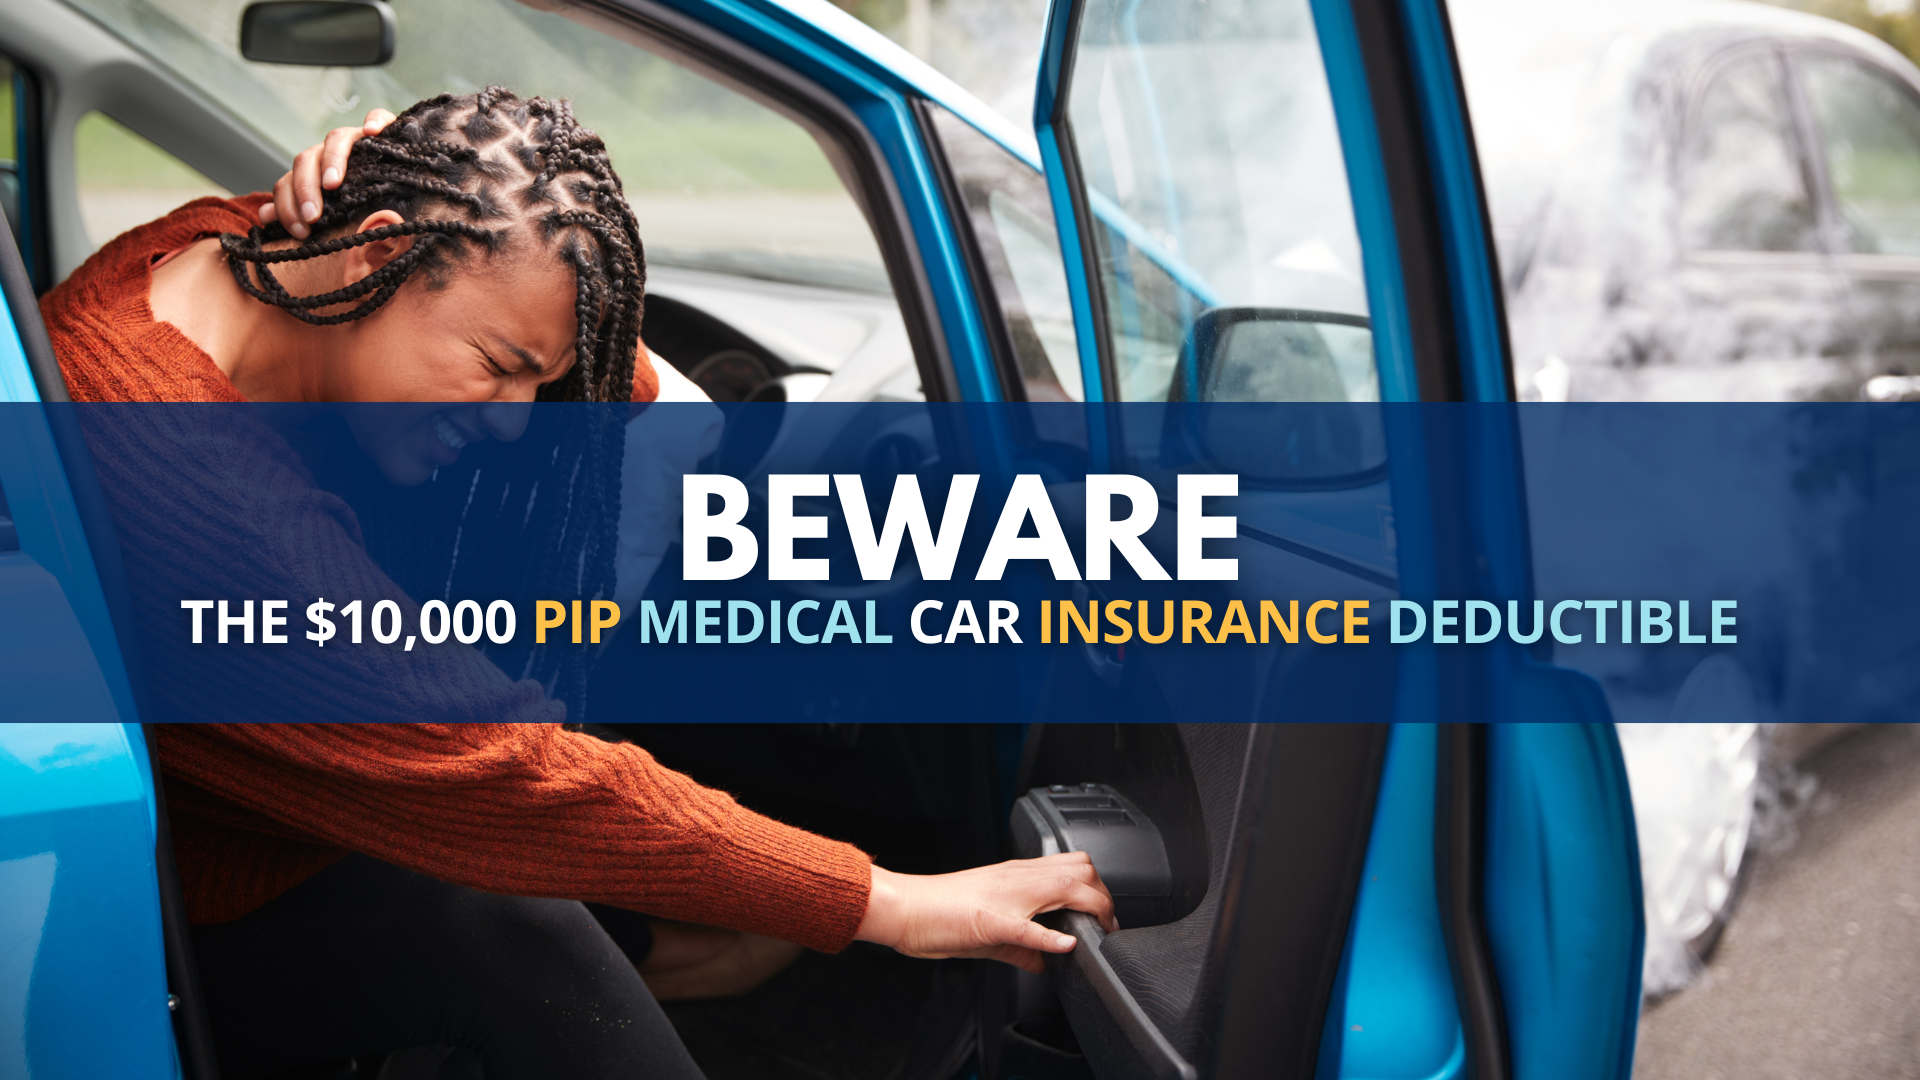 Beware the $10,000 PIP medical car insurance deductible